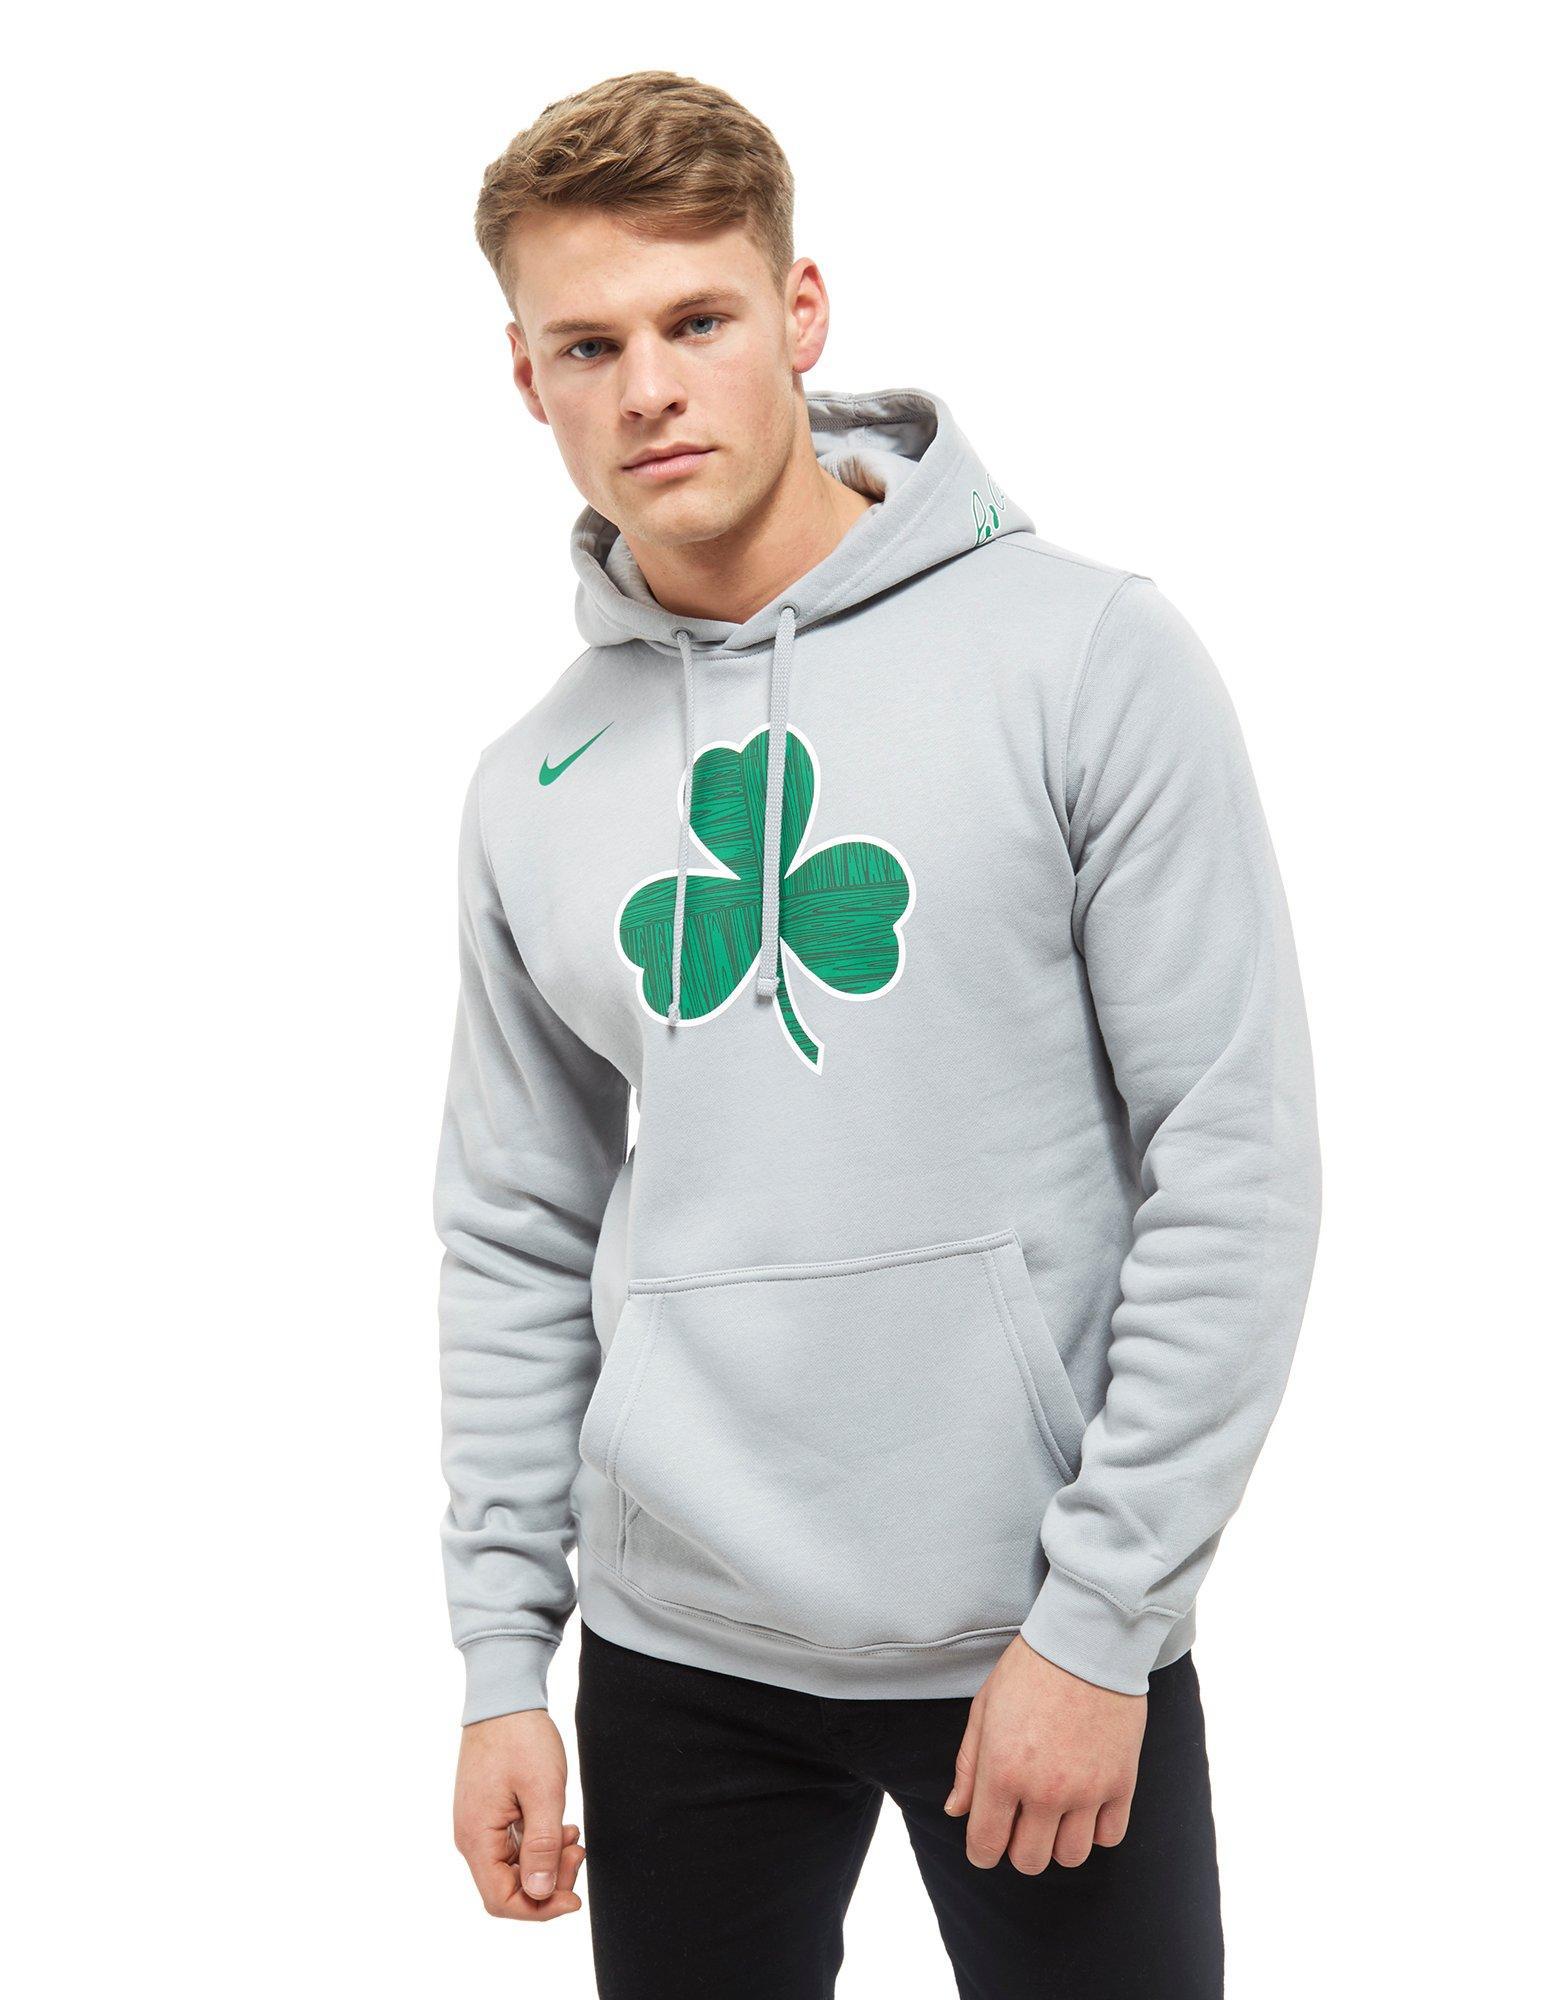 celtics city edition sweatshirt